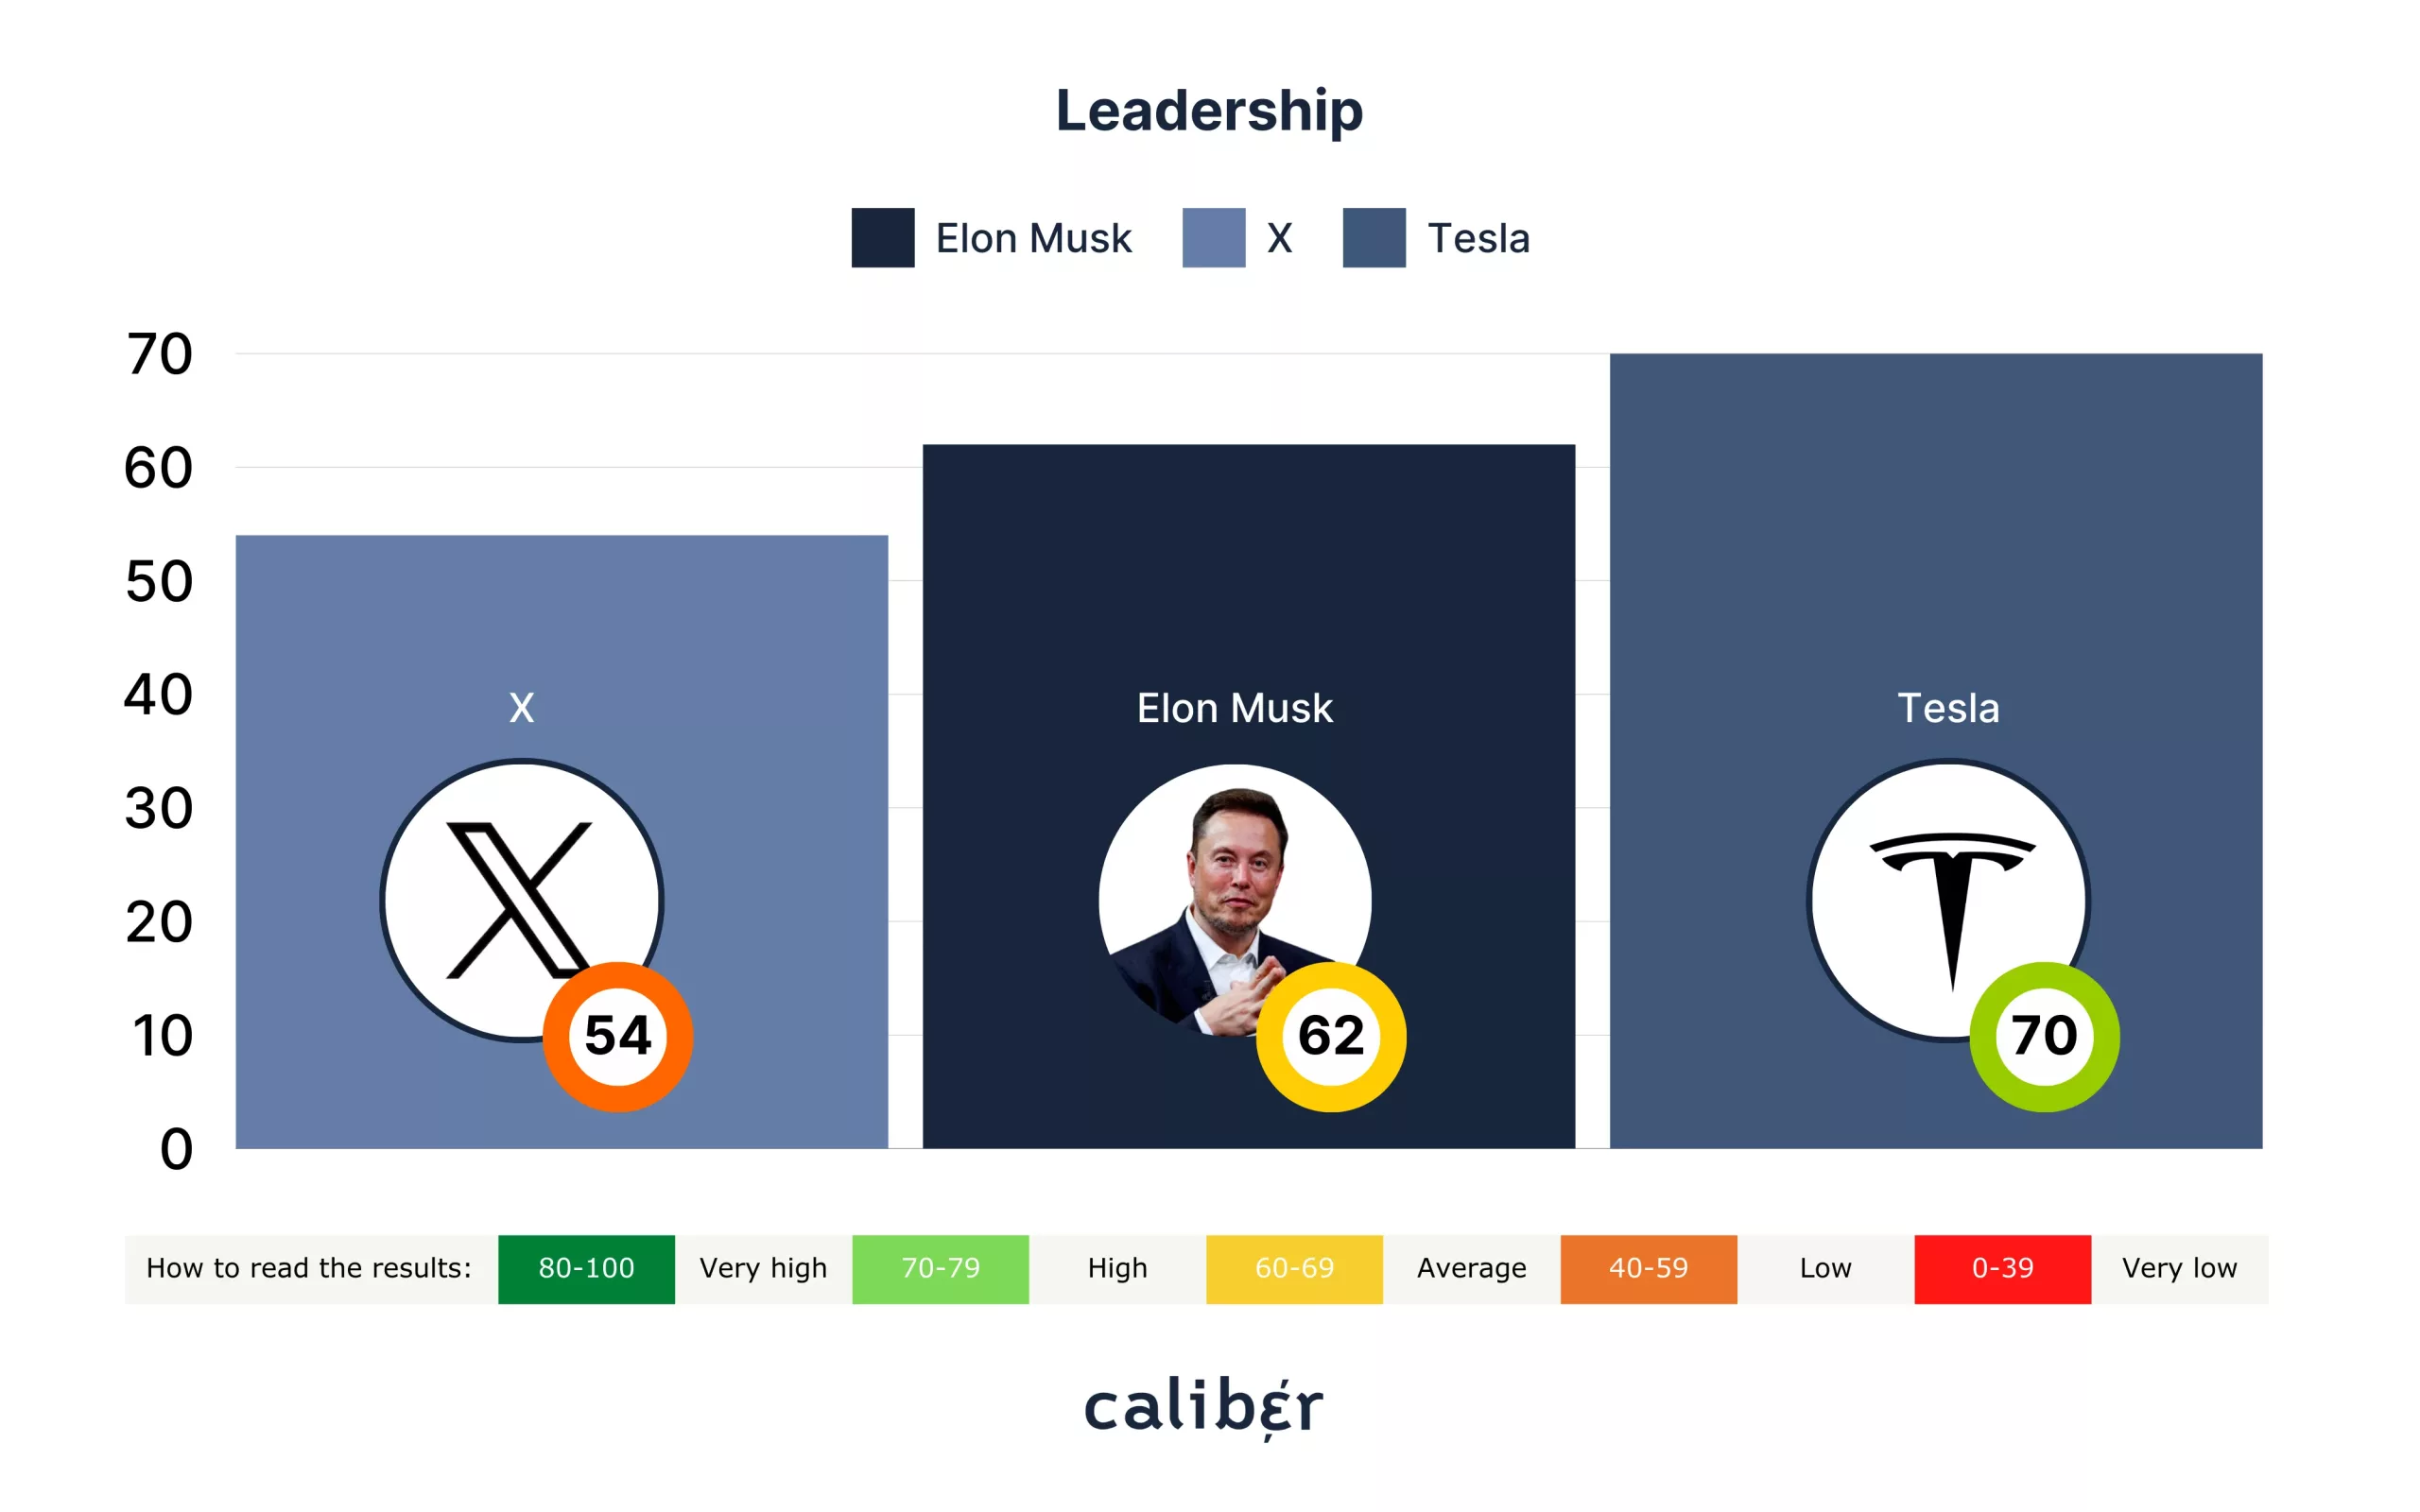 Elon Musk Leadership Score